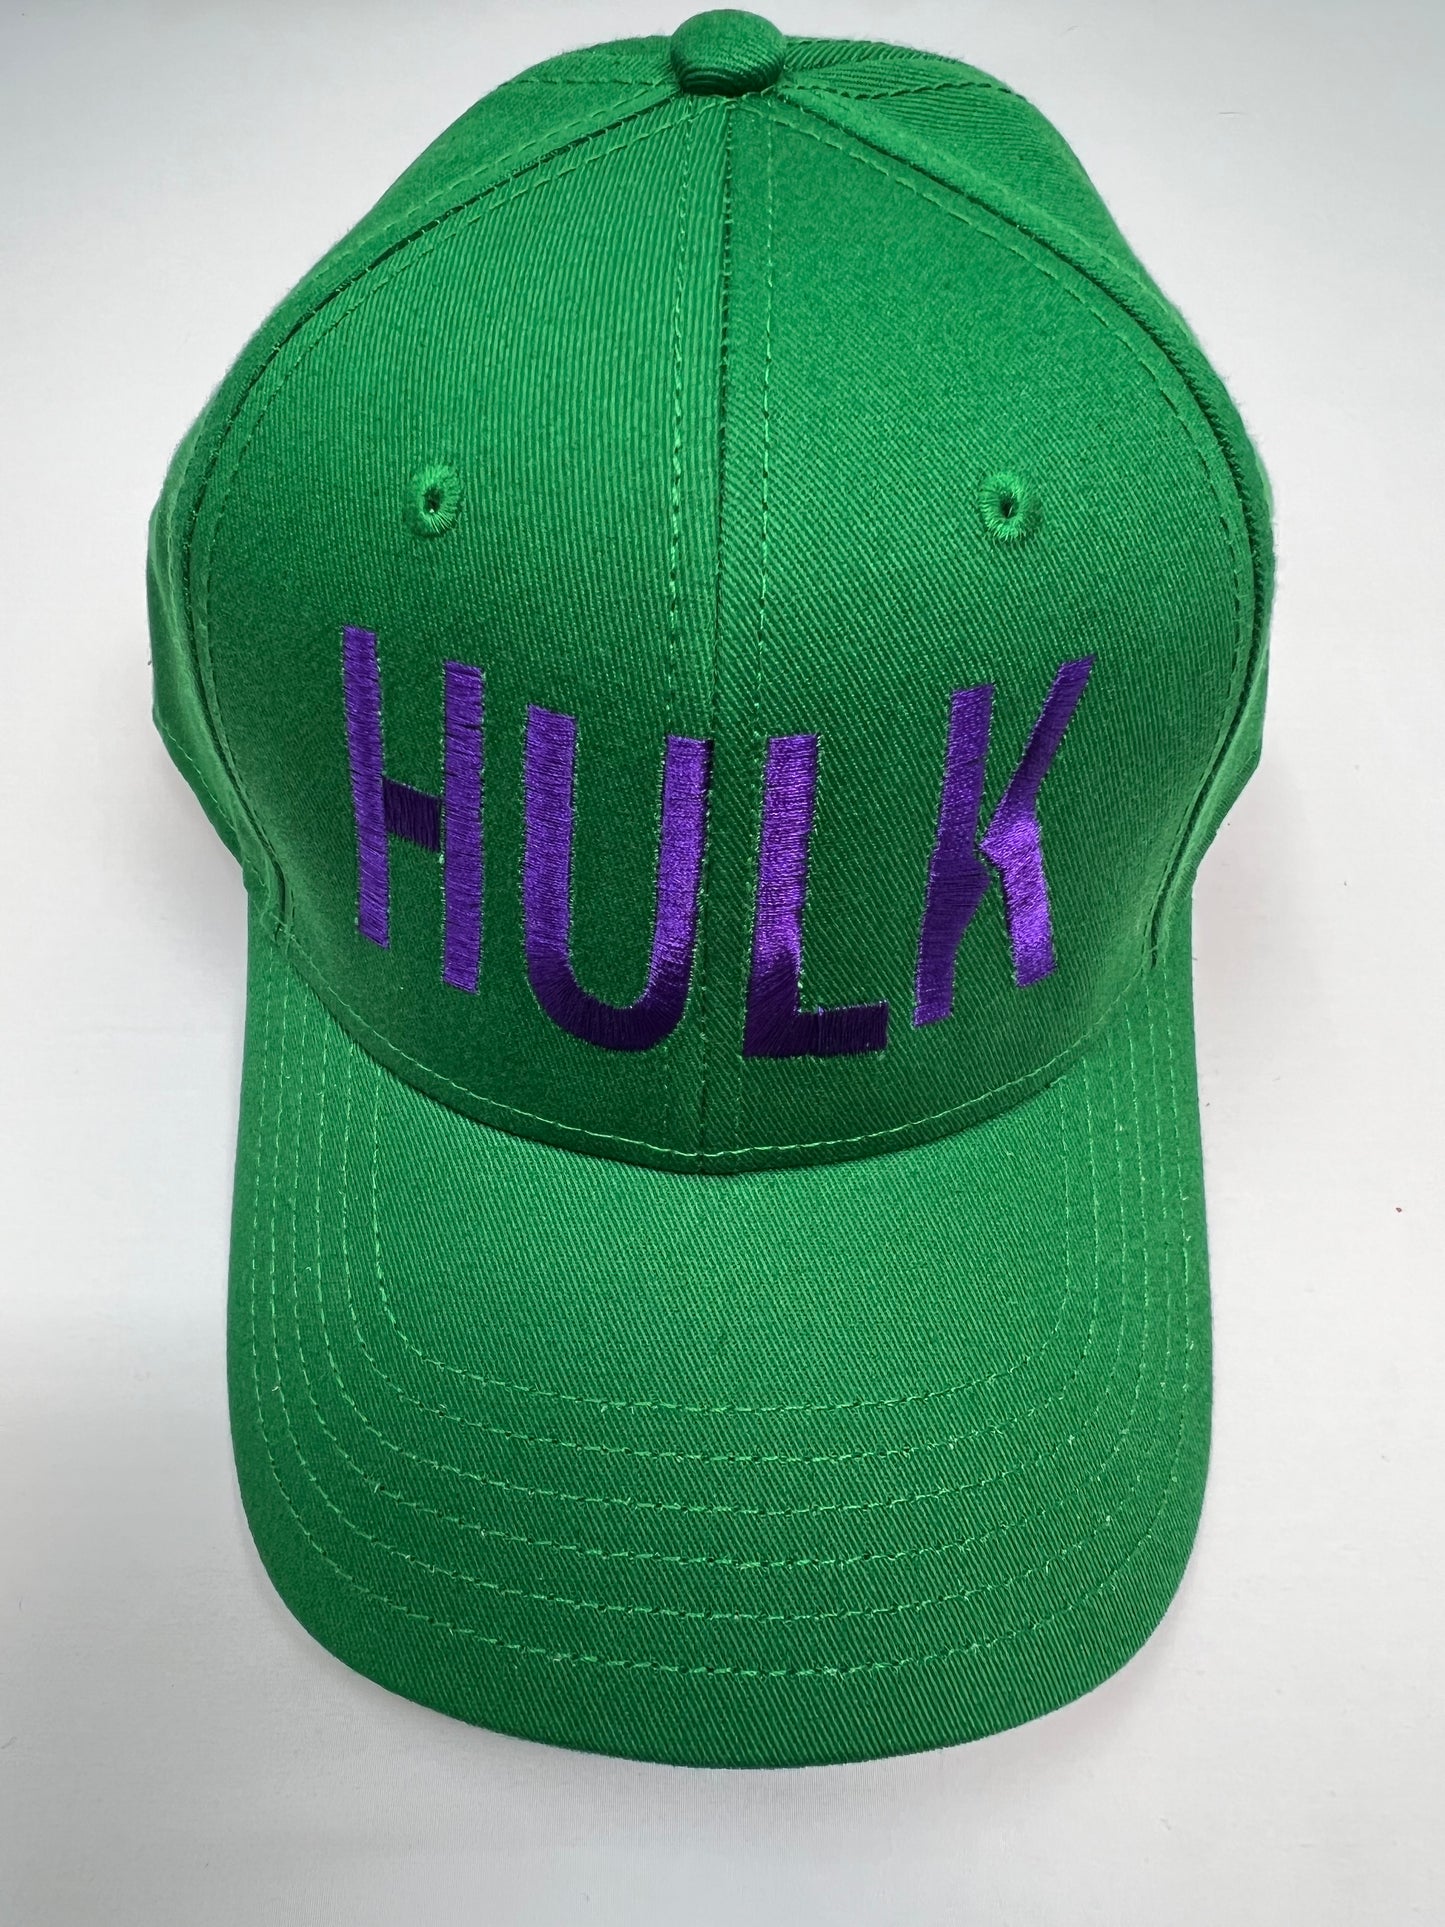 "HULK" Hat